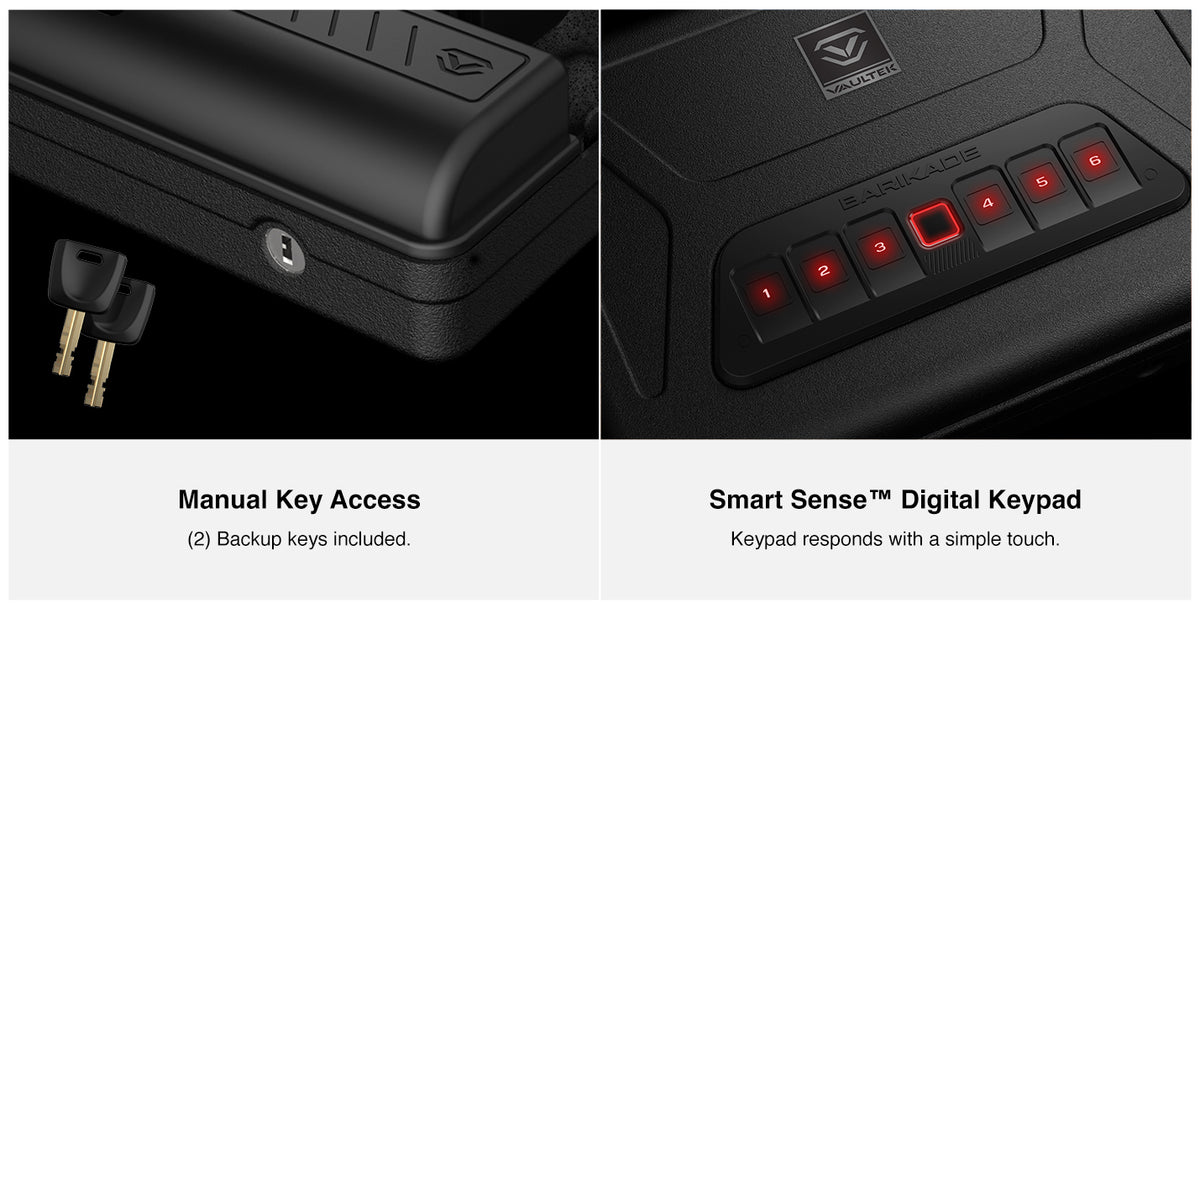 Vaultek - Barikade Series 2 Compact Rugged Biometric and Backlit Keypad Gun Safe